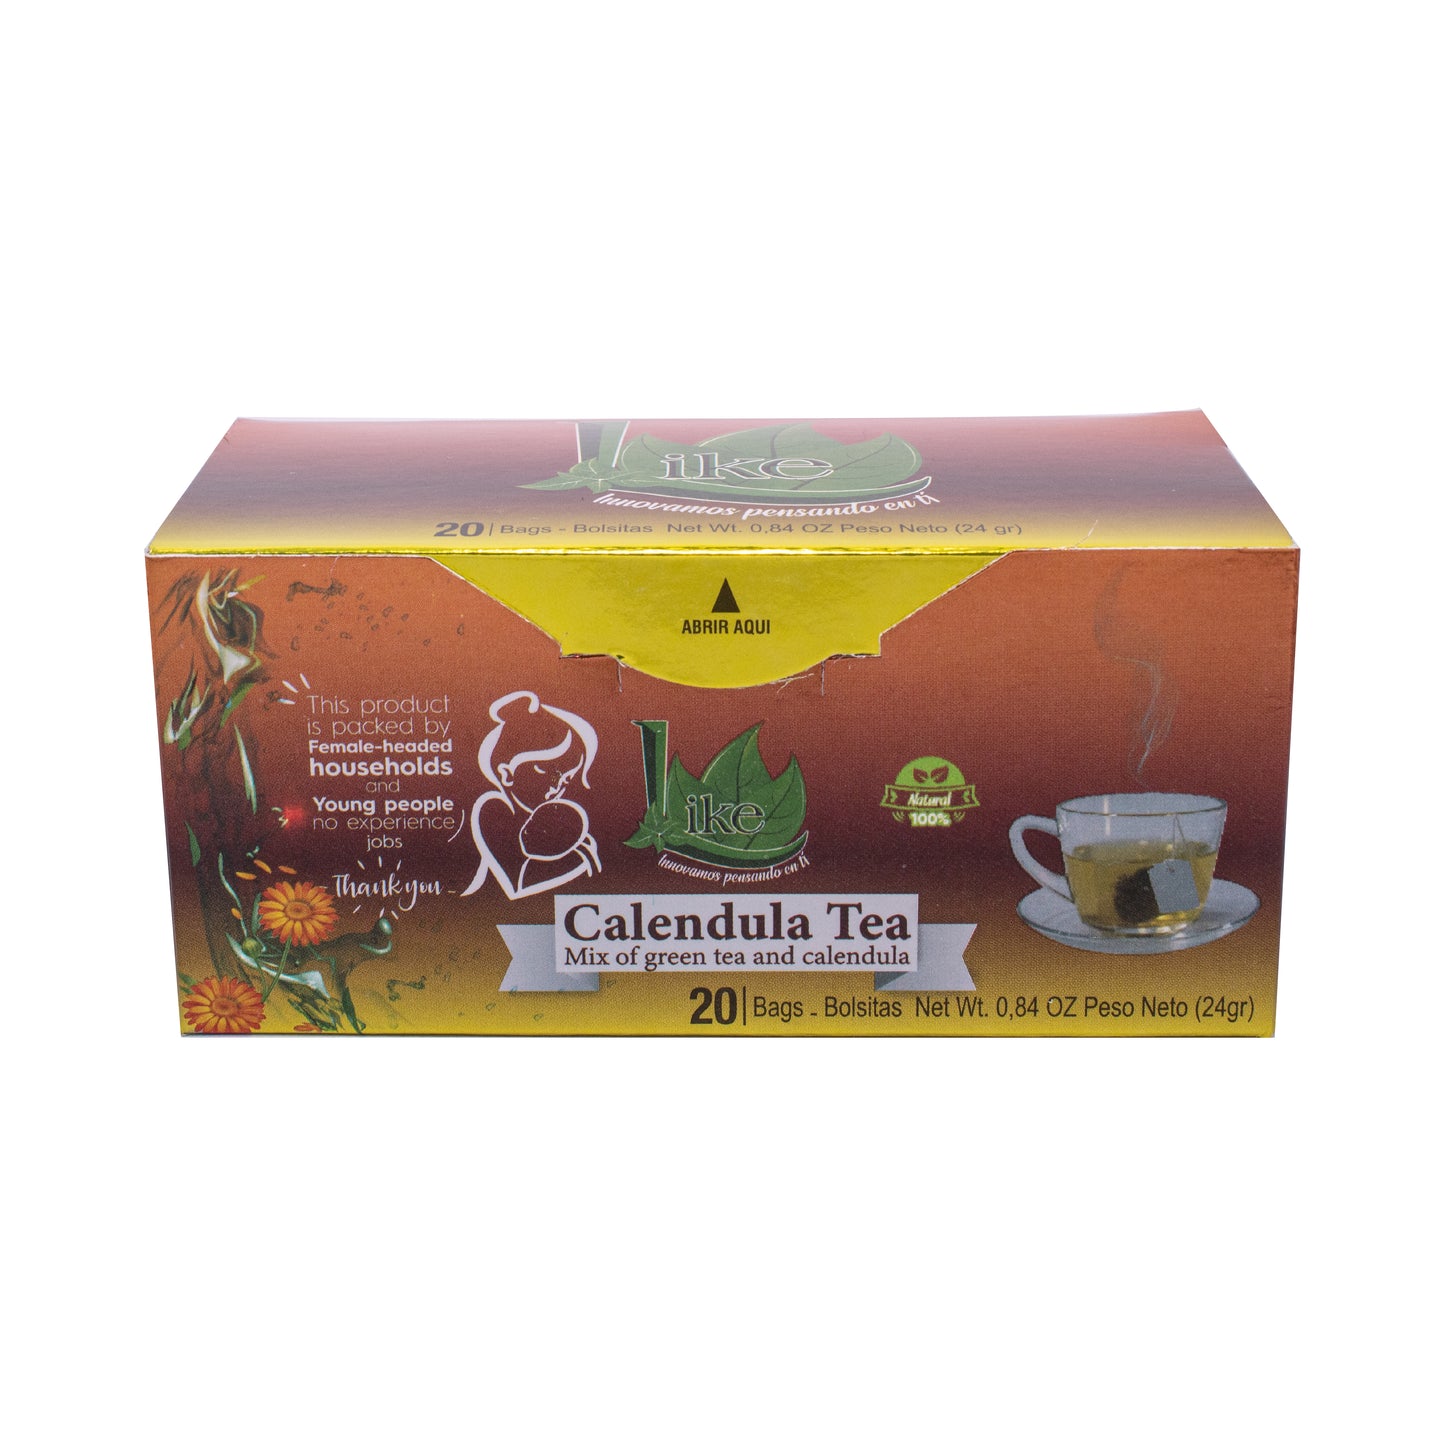 Calendula tea x 4 Packs, 80 Infusions